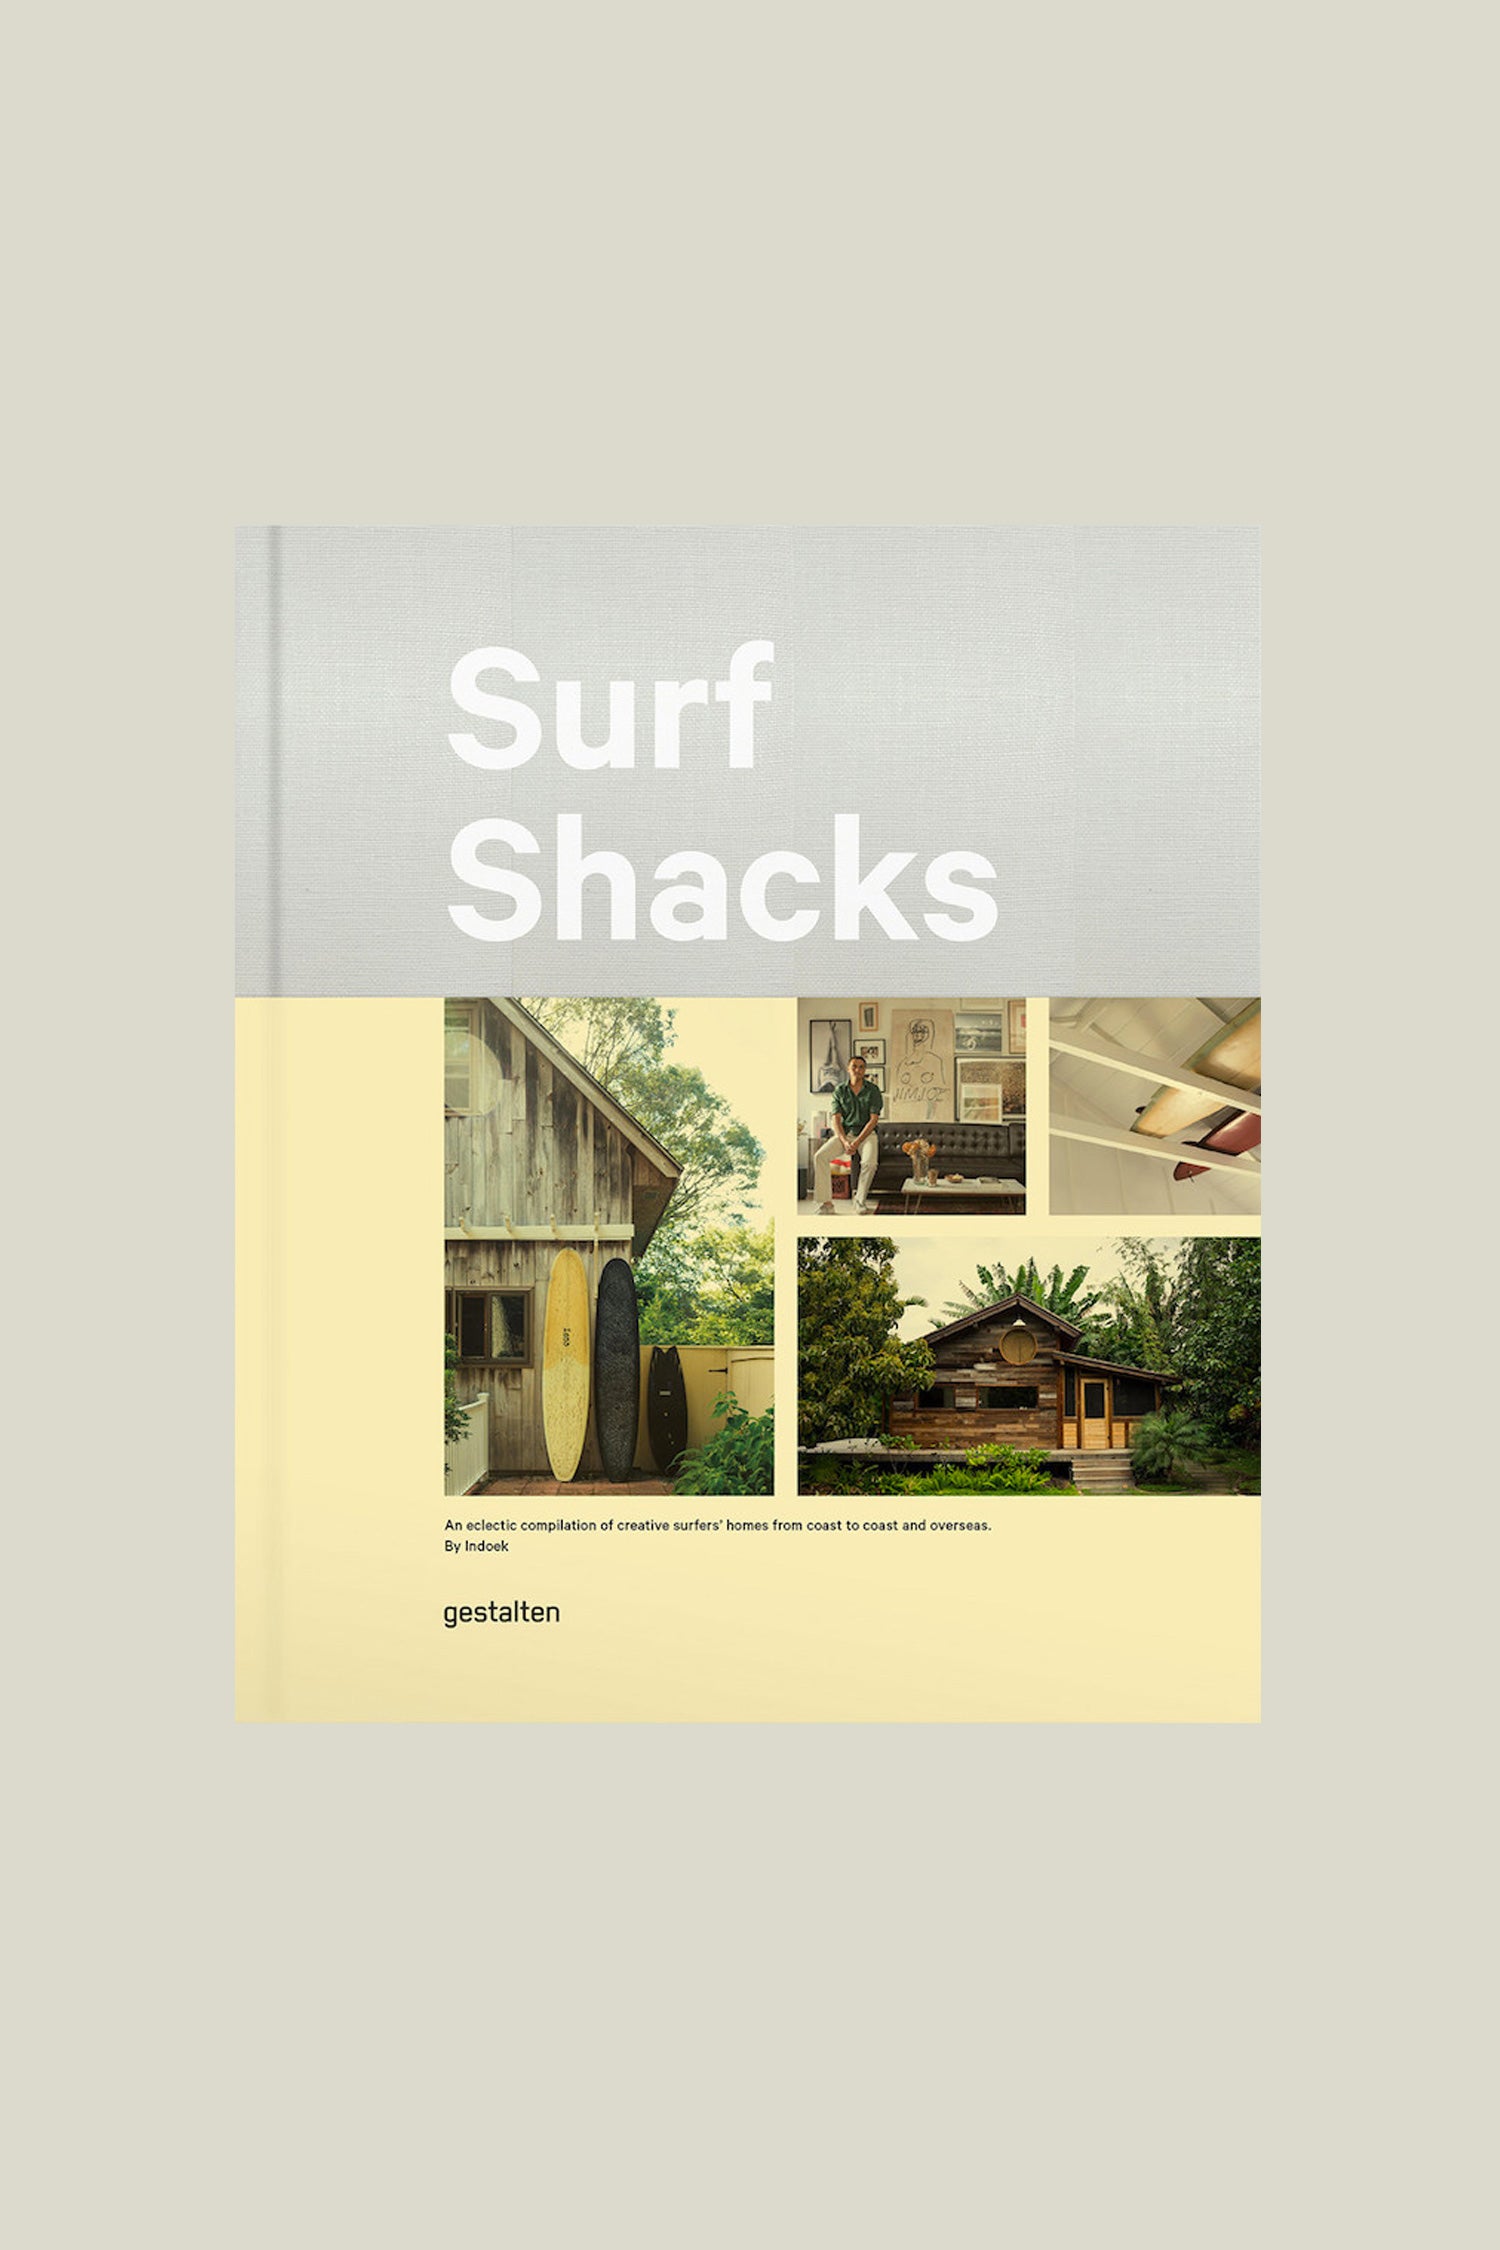 Surf Shacks Vol.1